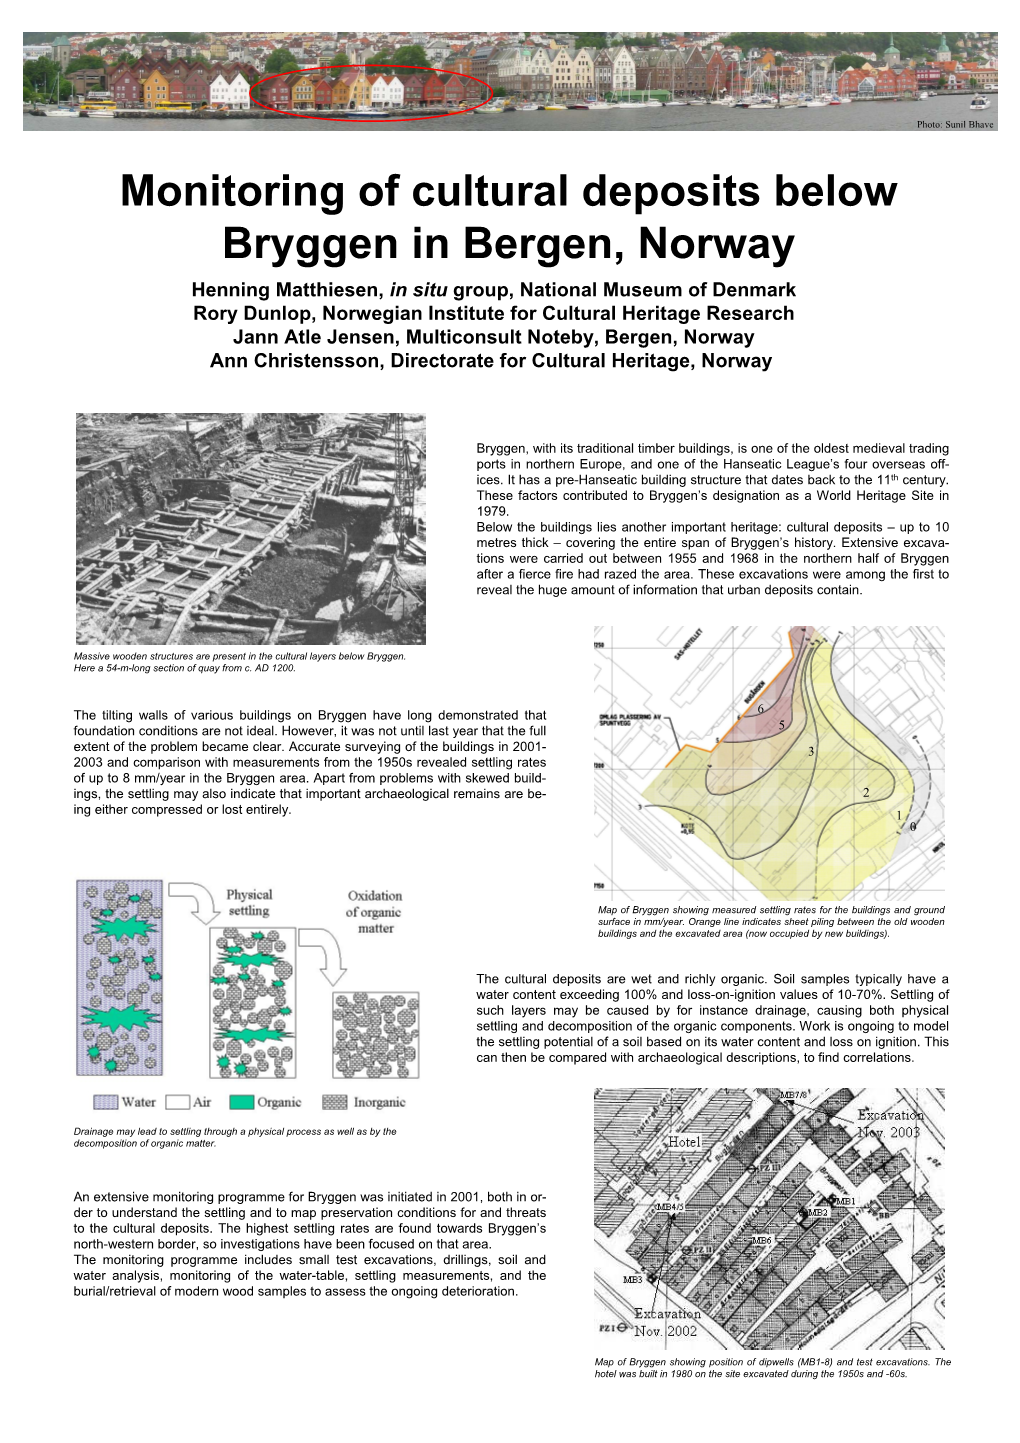 Monitoring of Cultural Deposits Below Bryggen in Bergen, Norway